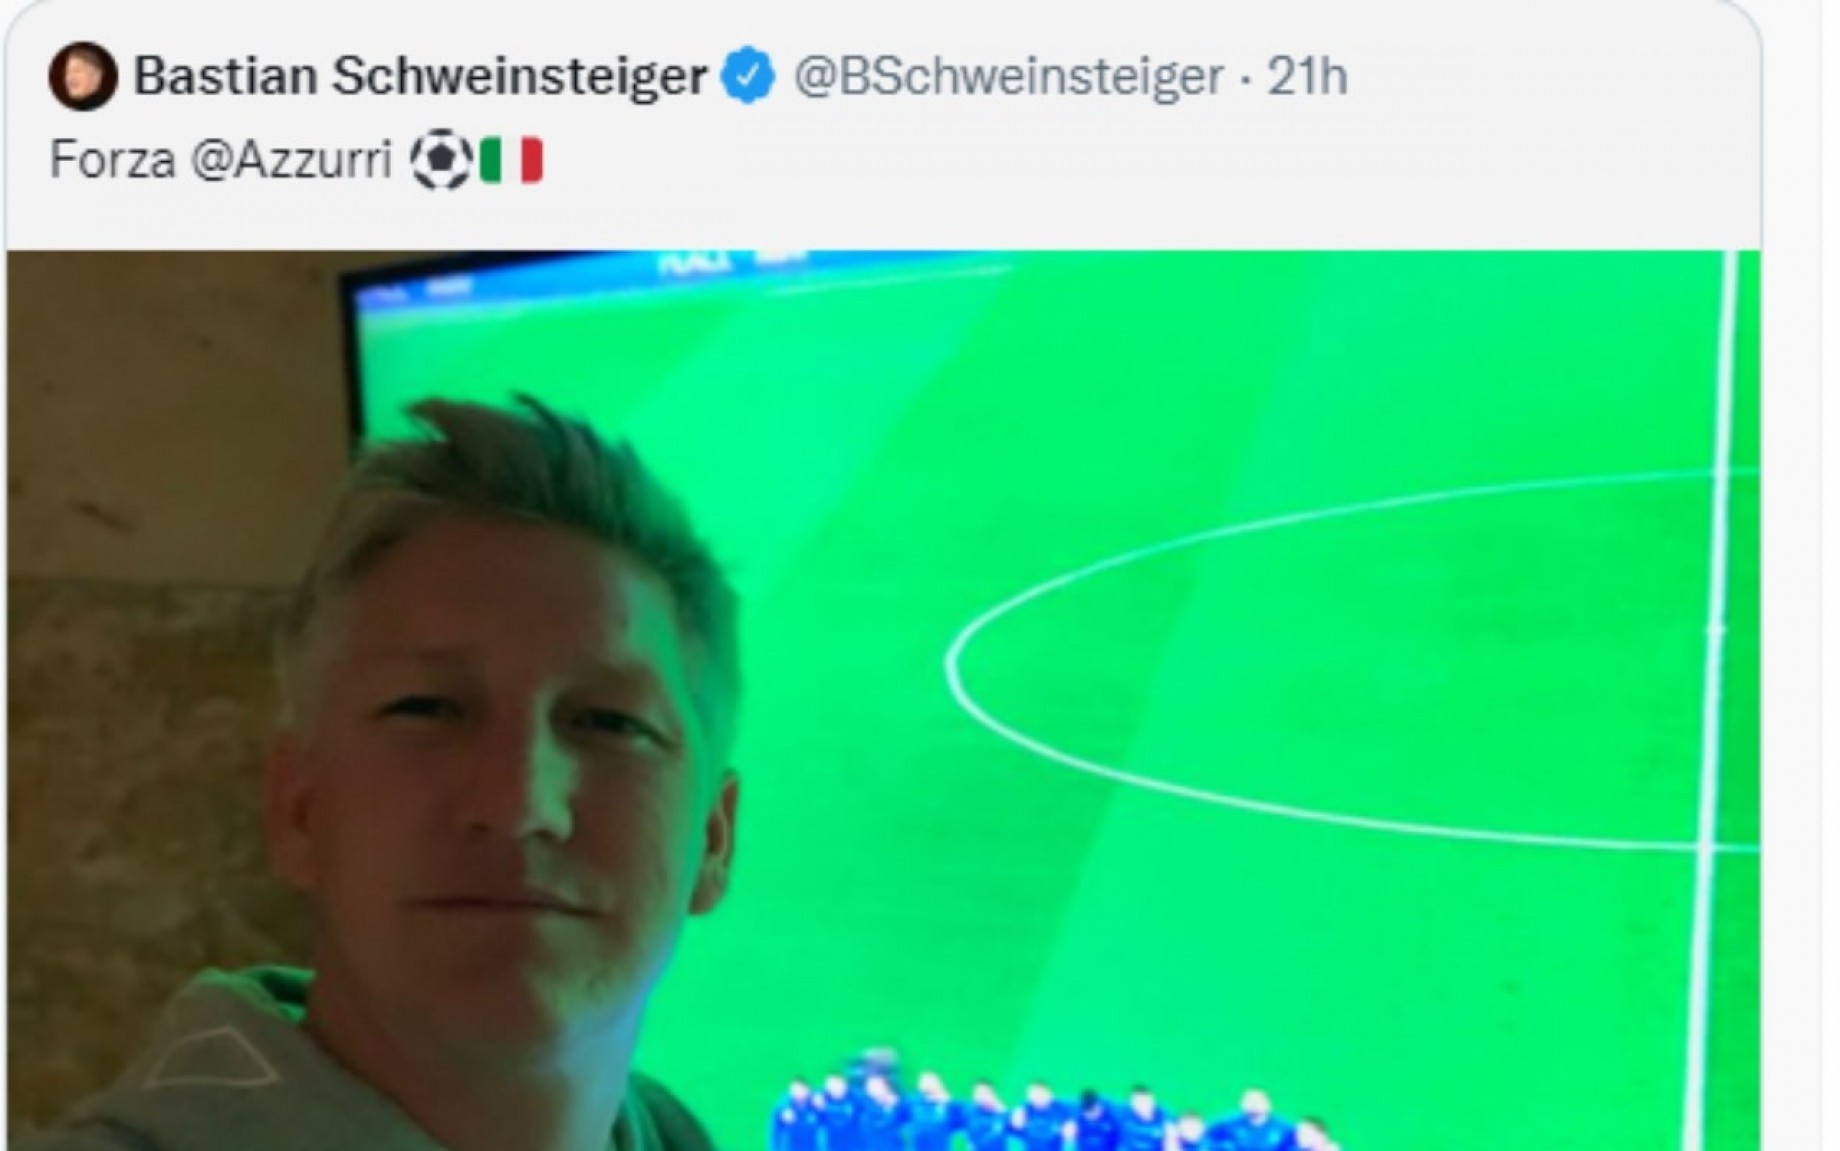 schweinsteiger-twitter-screen-gpo.jpg